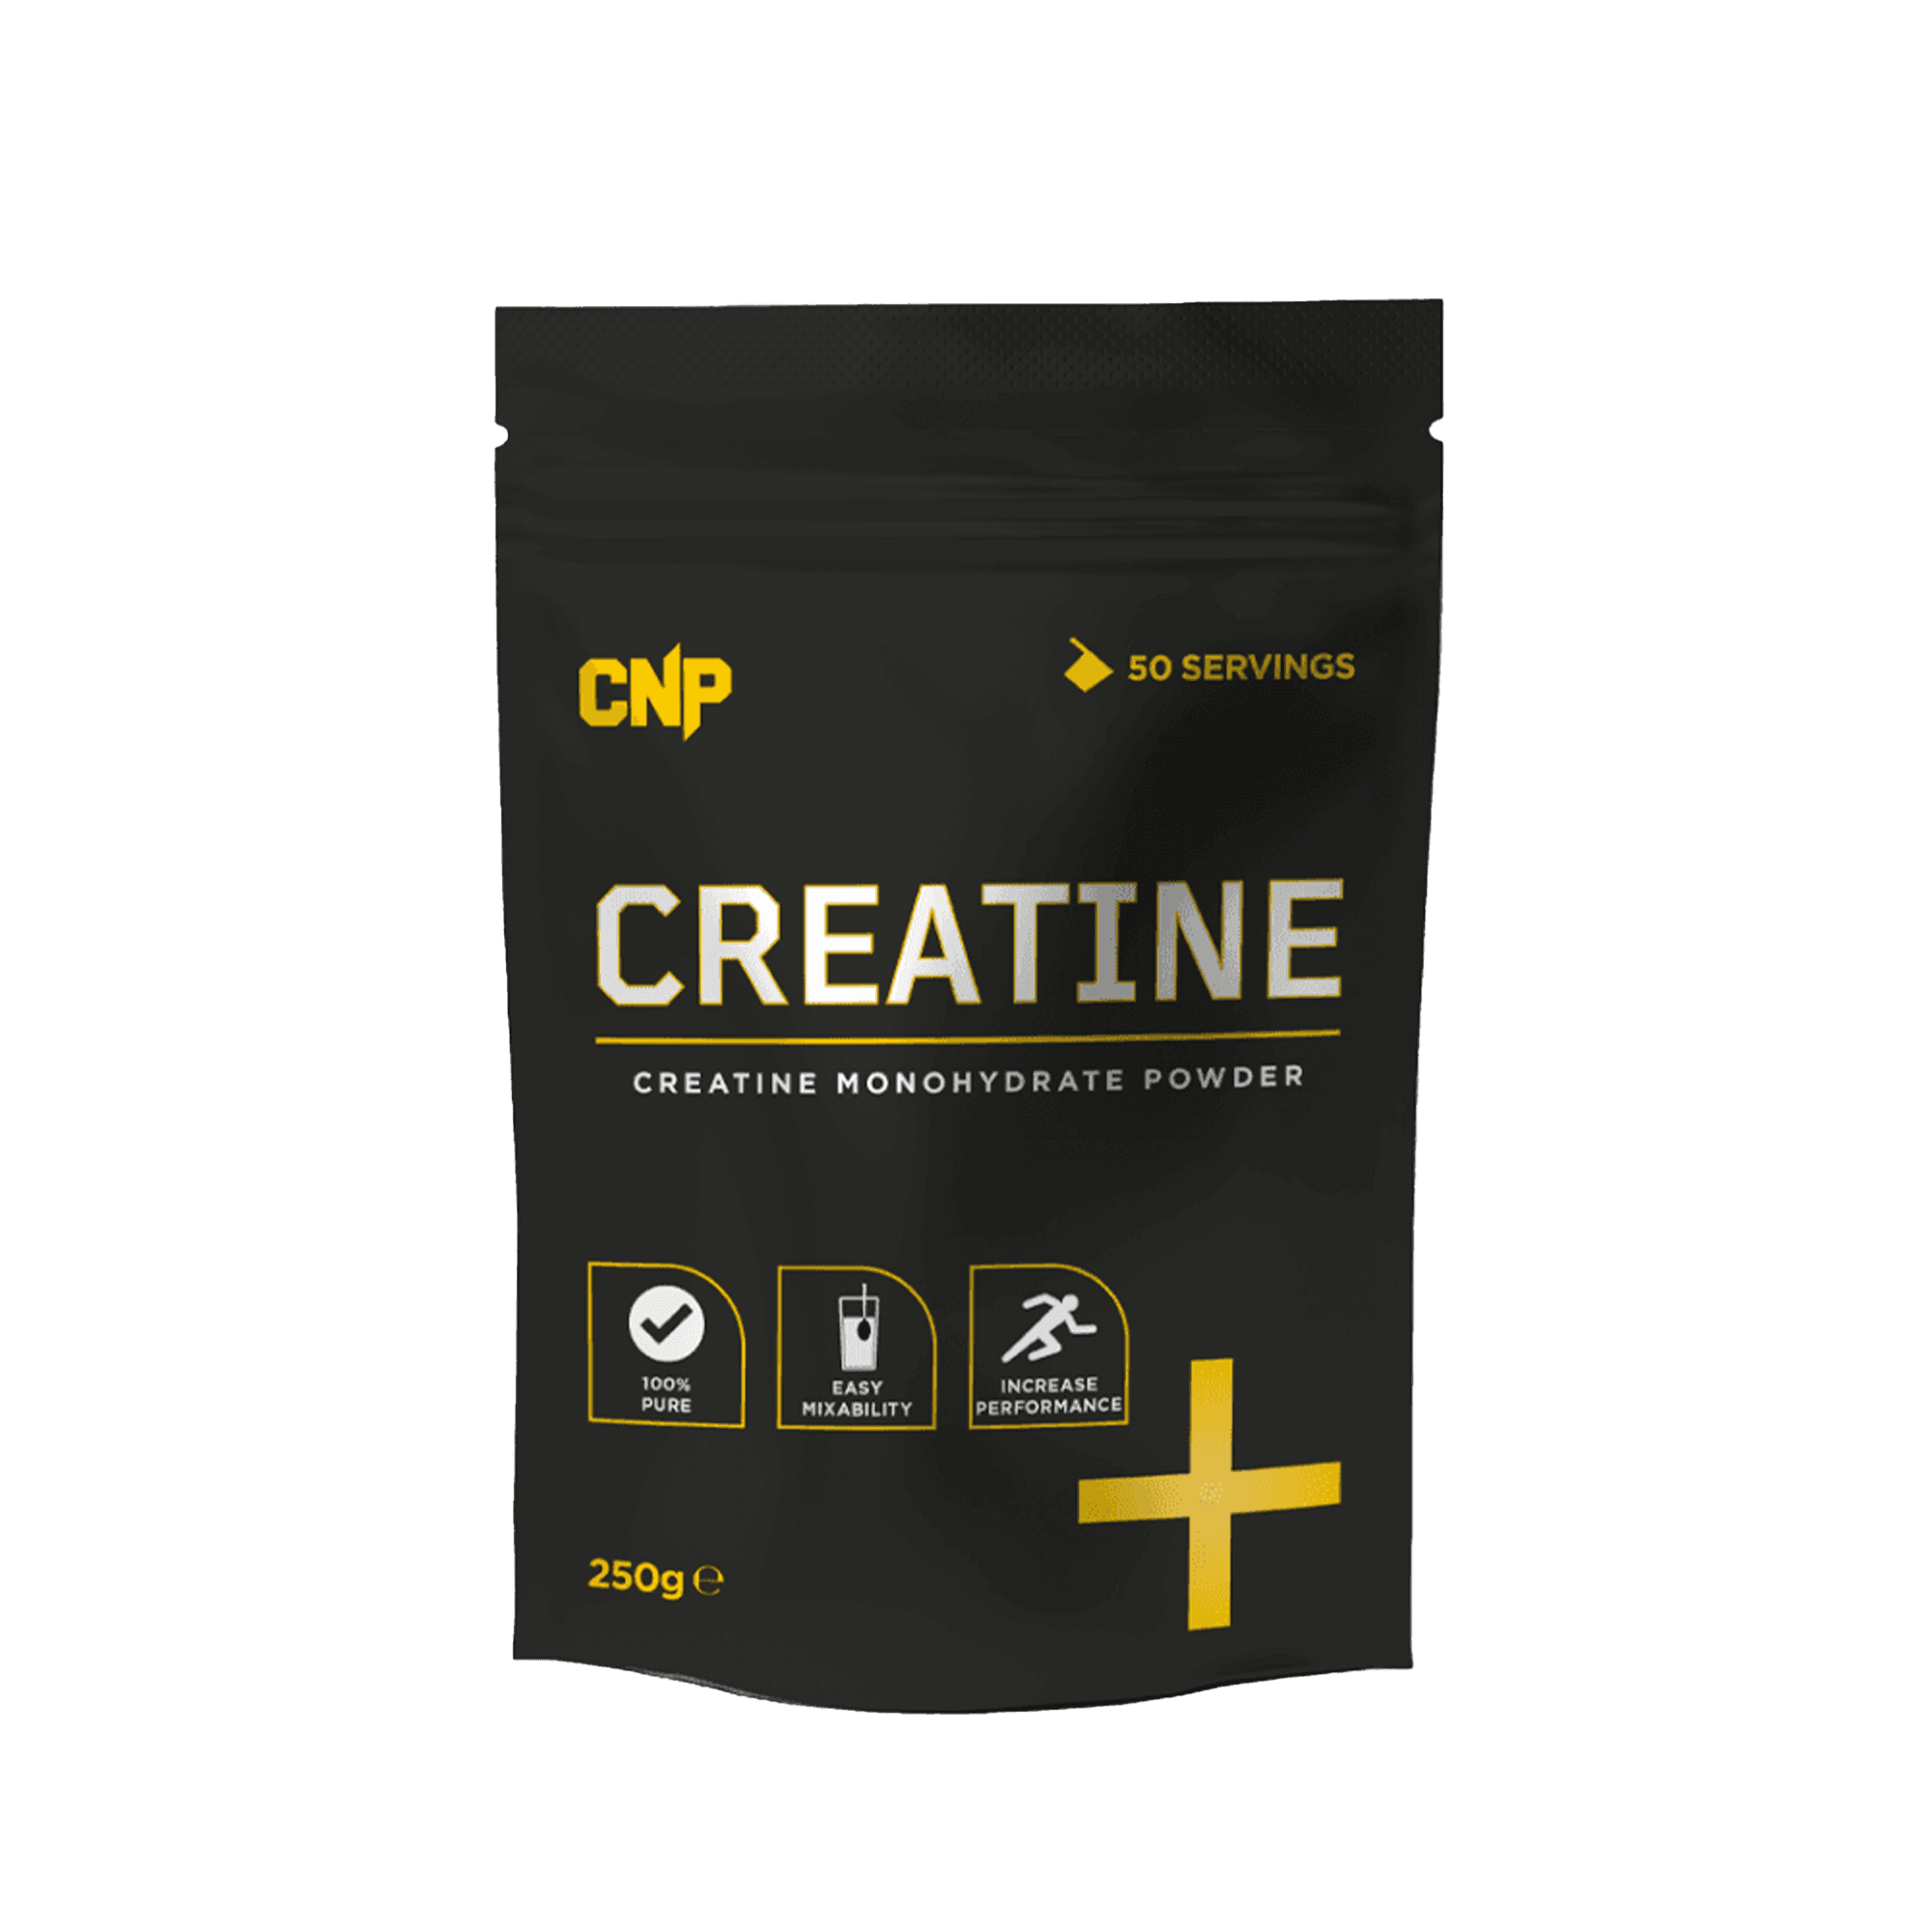 CNP Creatine Monohydrate Powder